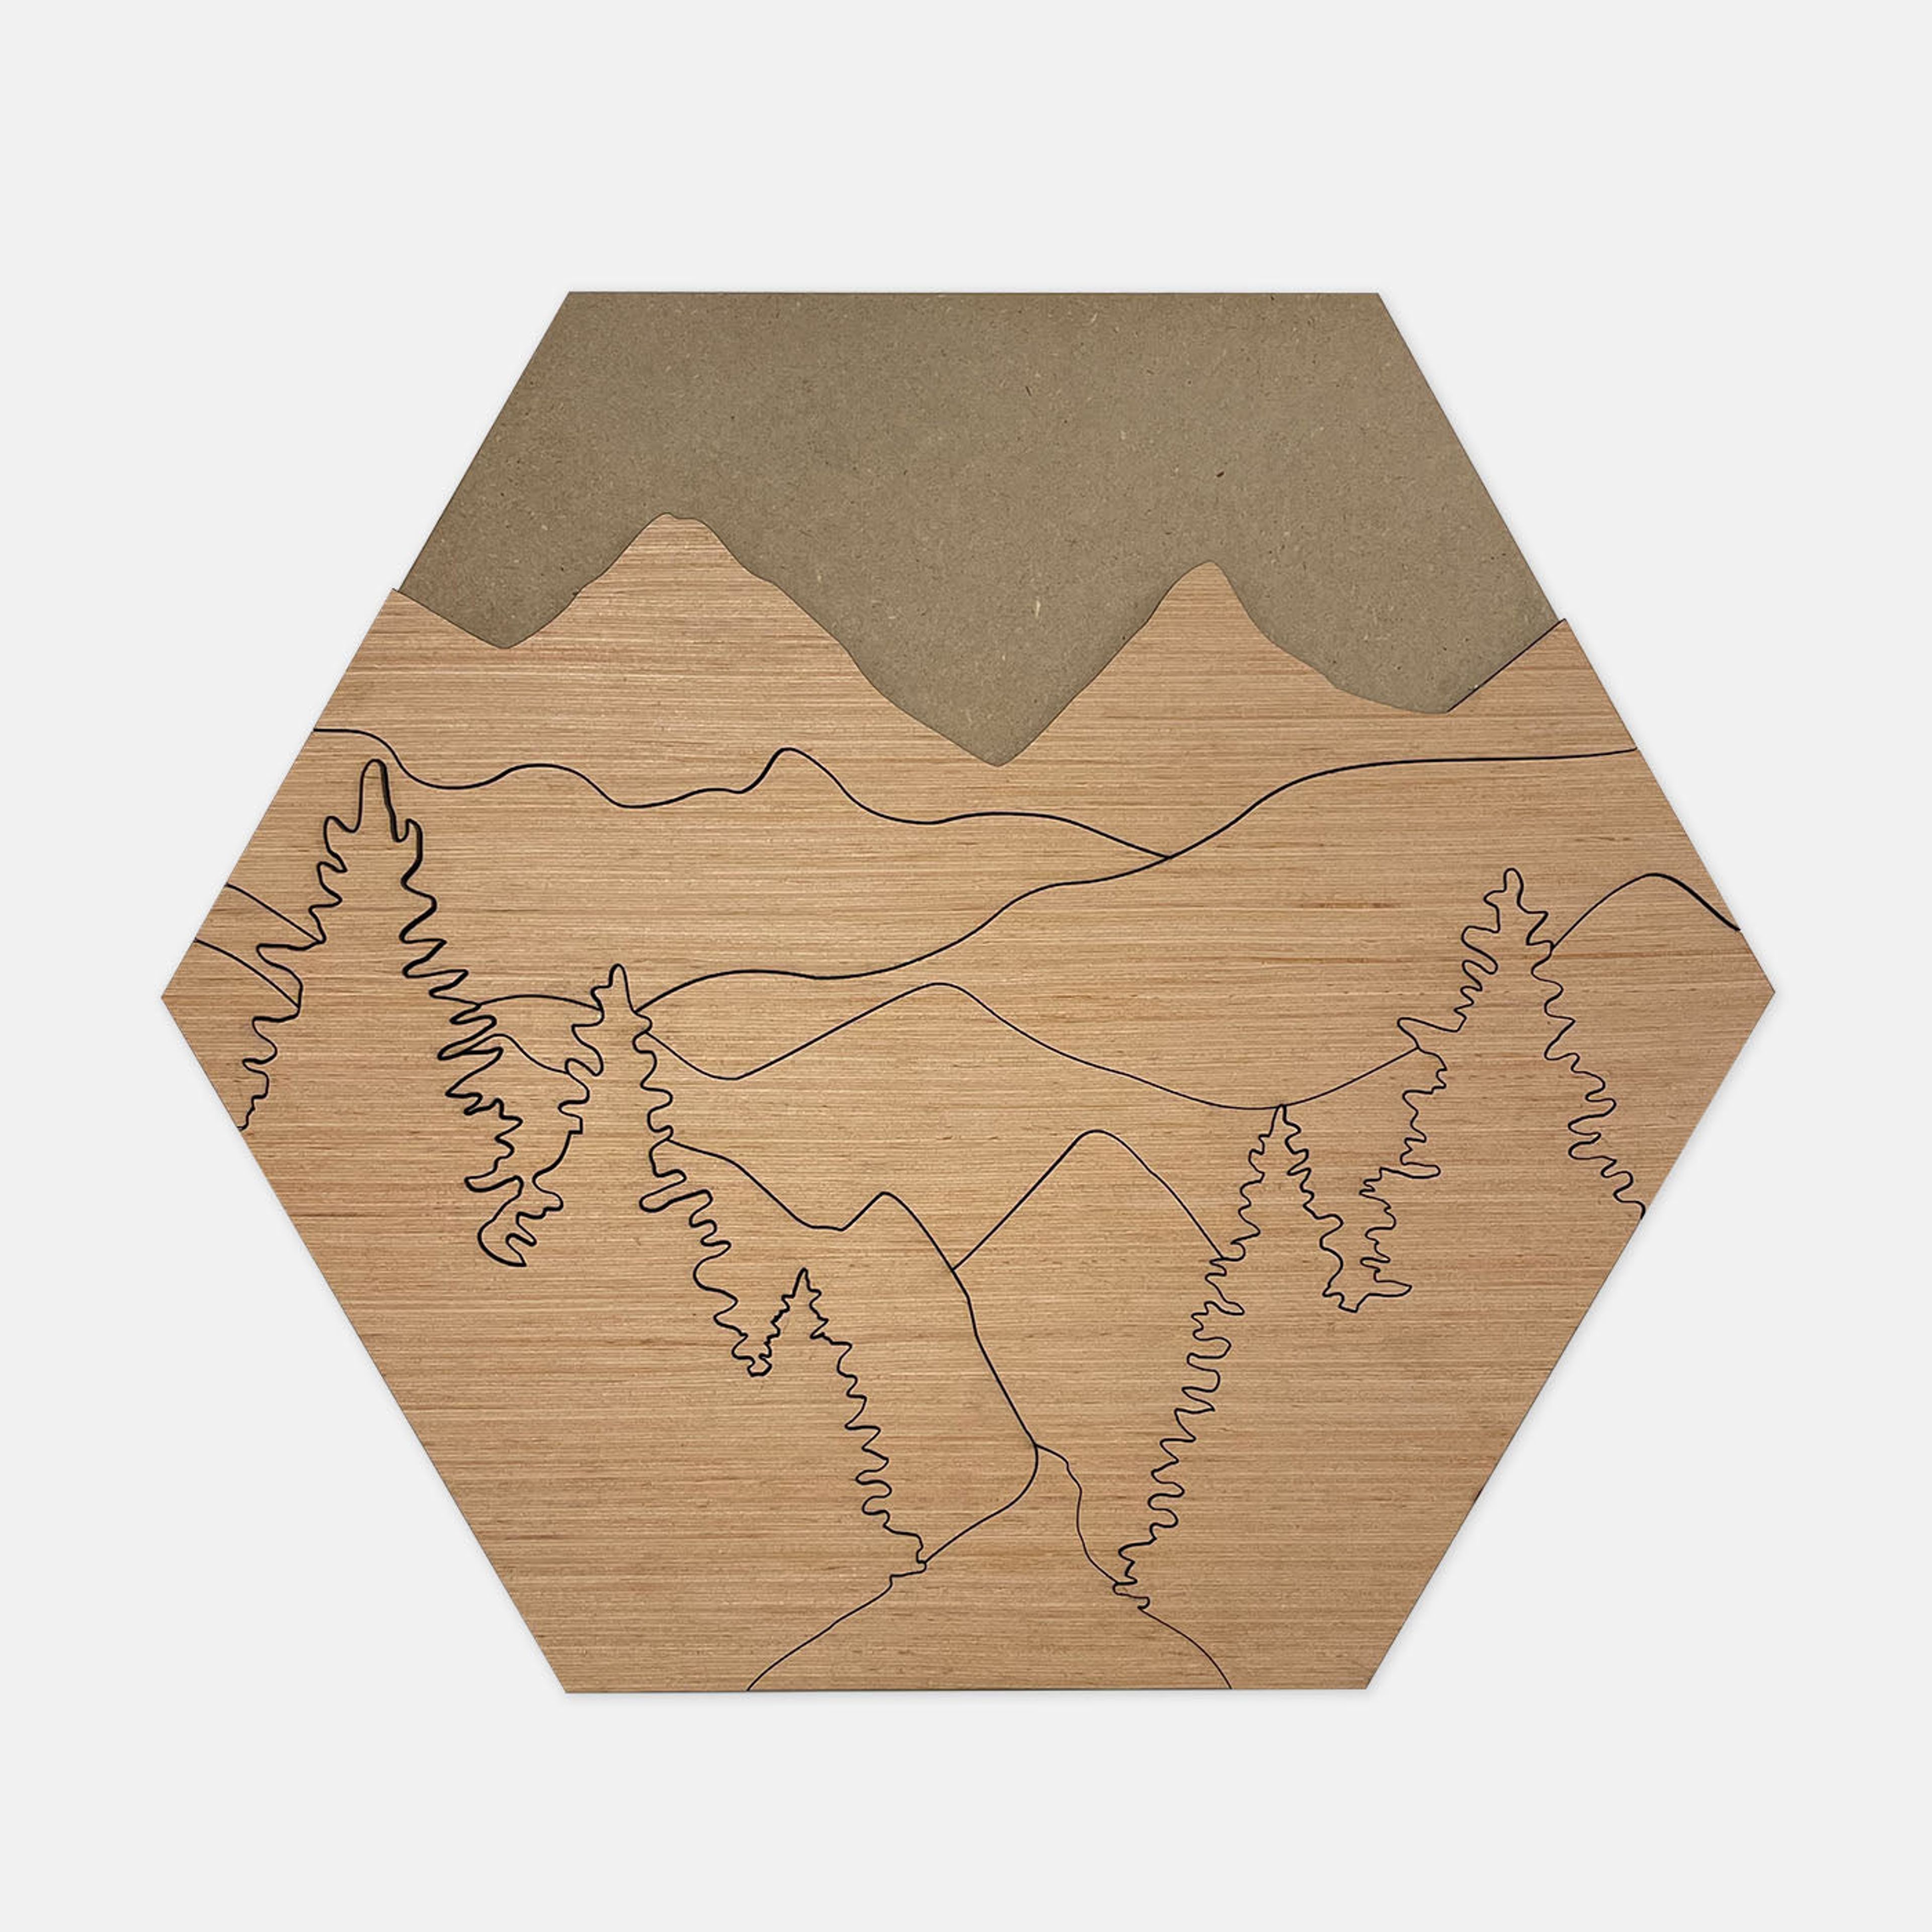 Wood Mosaic Kit: Venture